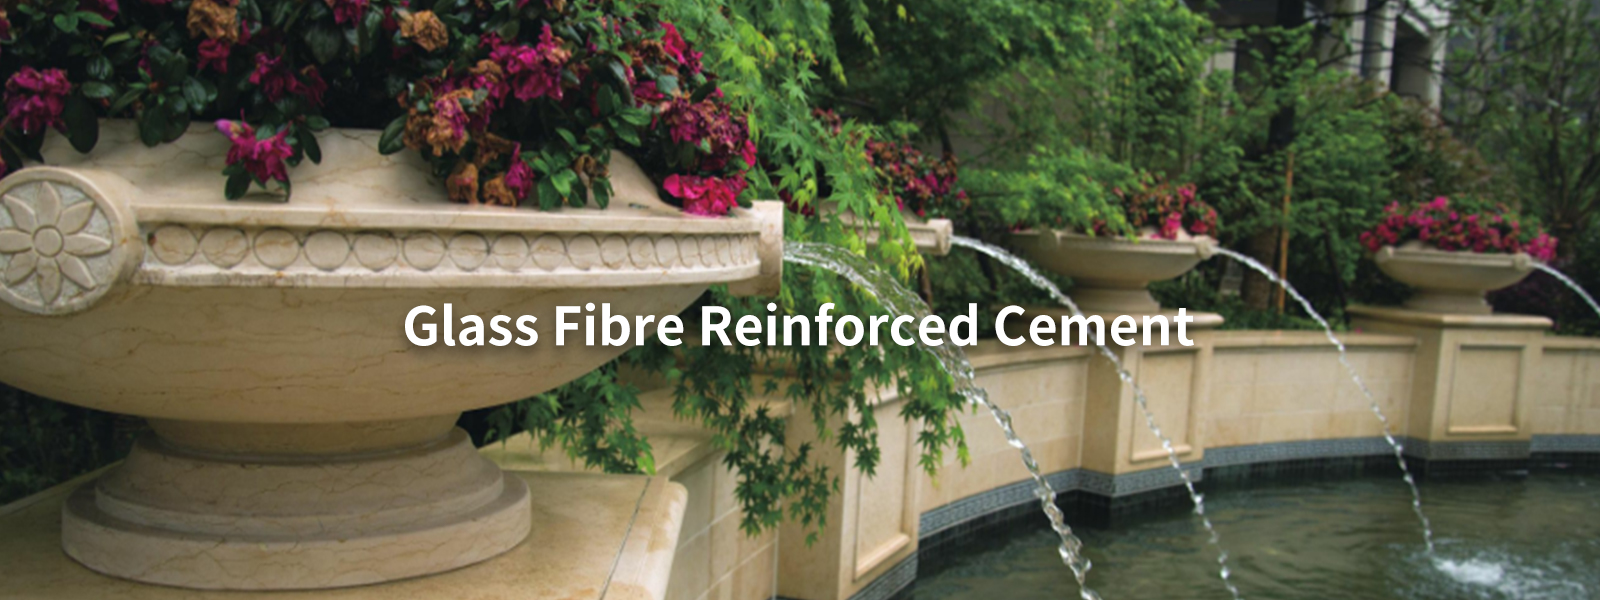 GFRC(Glass Fibre Reinforced Cement)